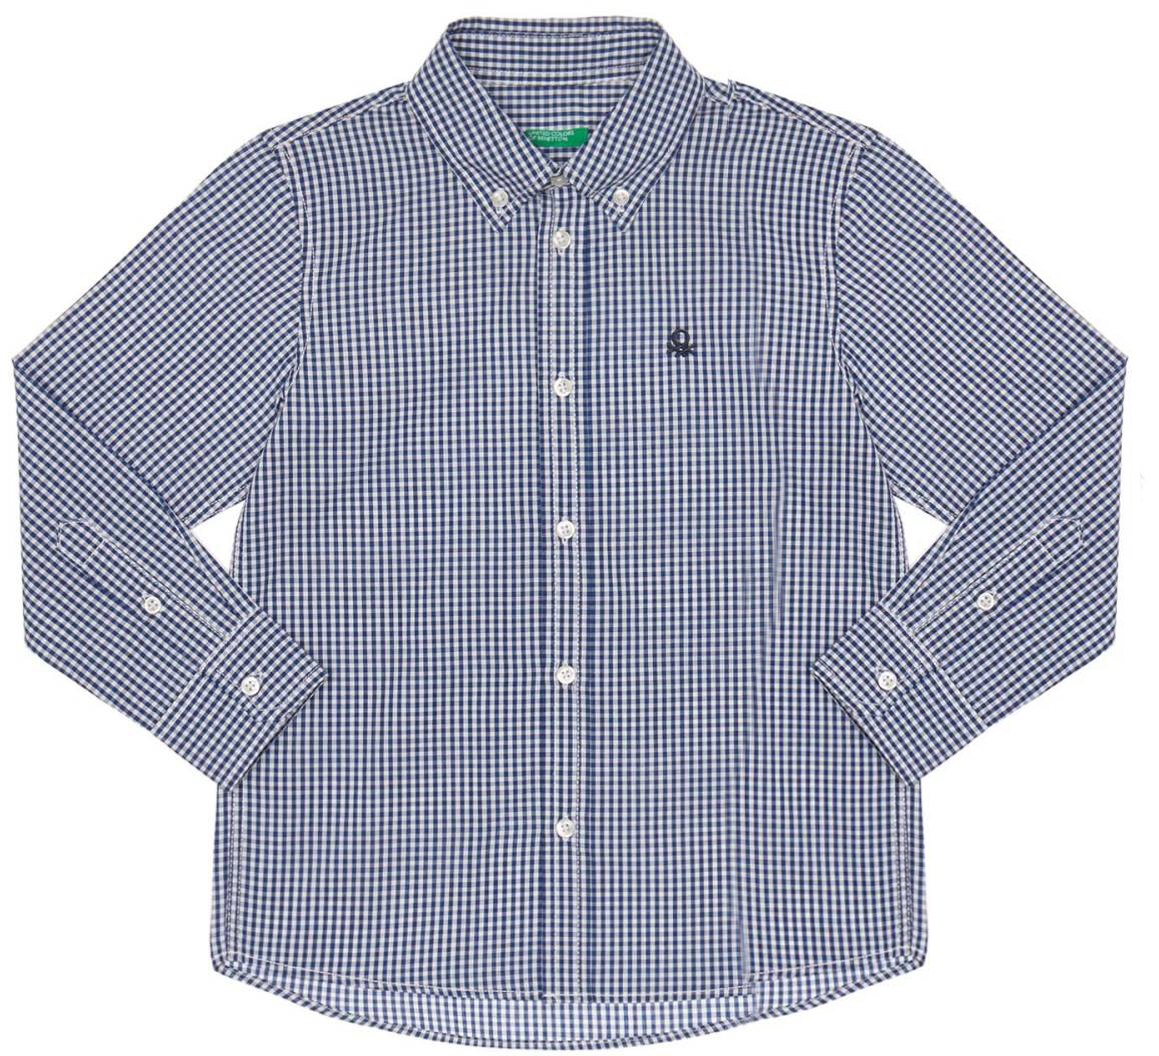 Рубашка для мальчика United Colors of Benetton, цвет: синий. 5DU65Q200_949. Размер XXS (100)